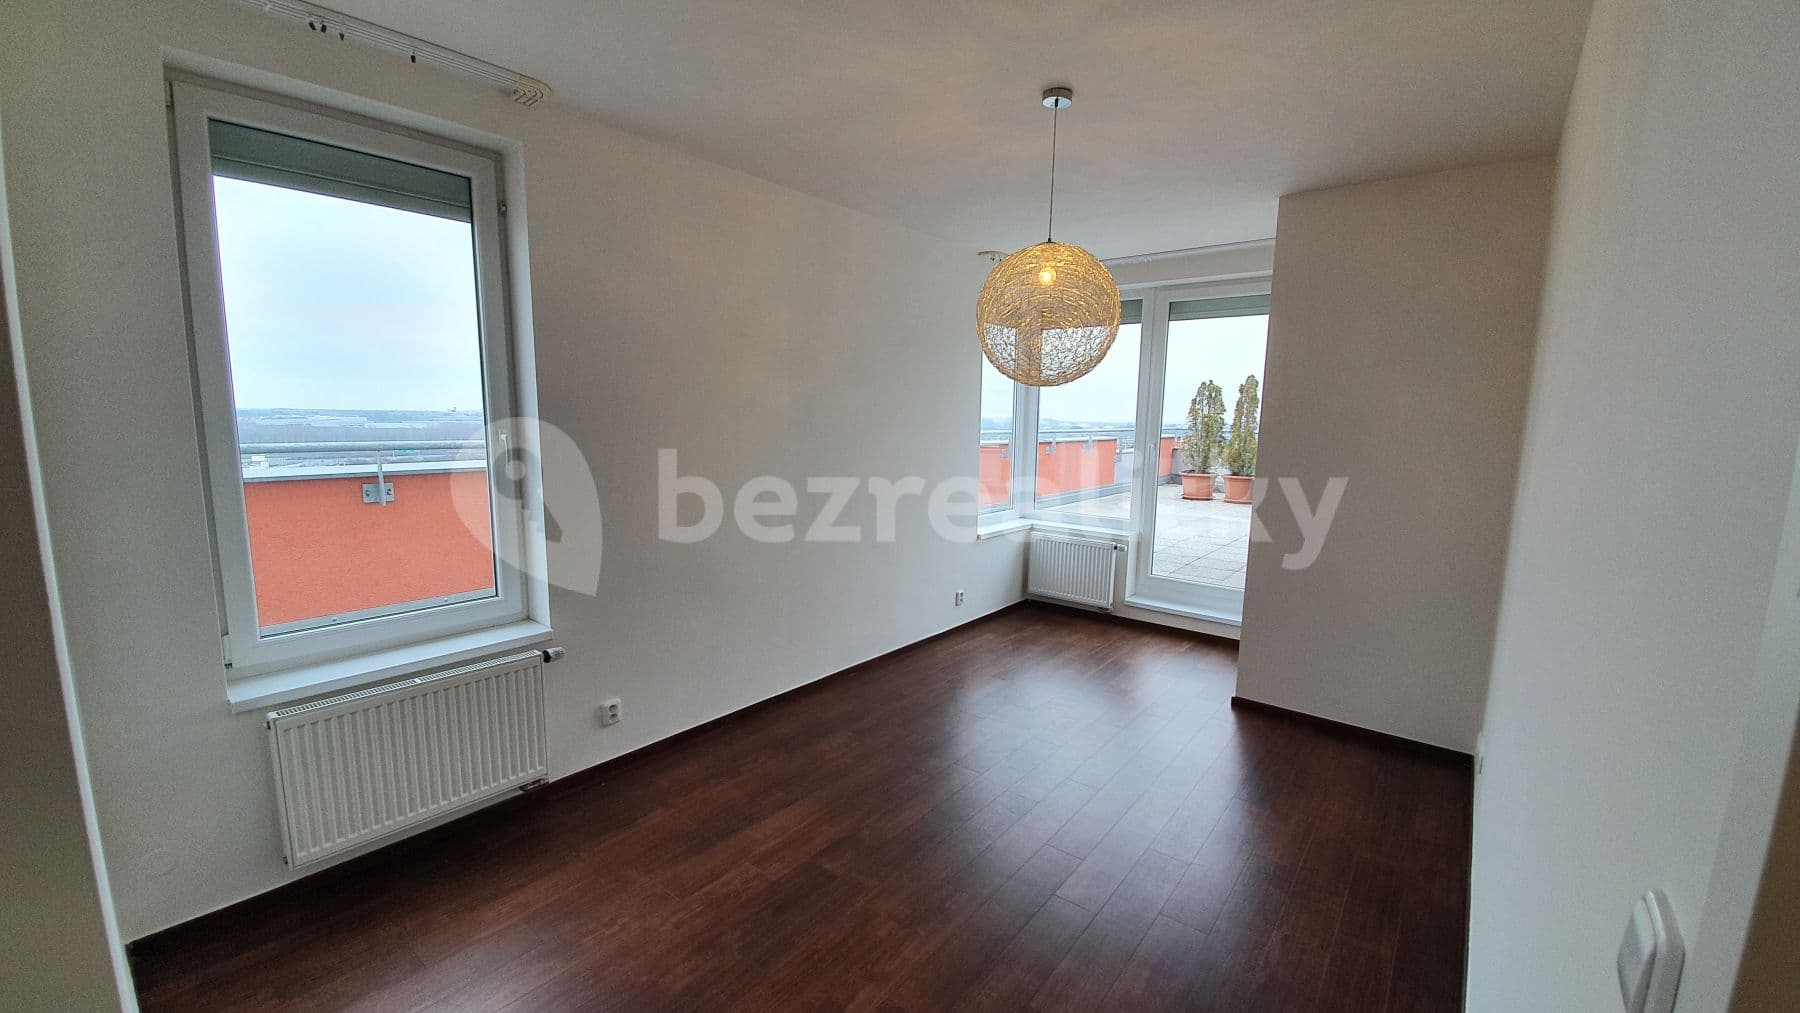 3 bedroom with open-plan kitchen flat to rent, 172 m², Milotická, Prague, Prague